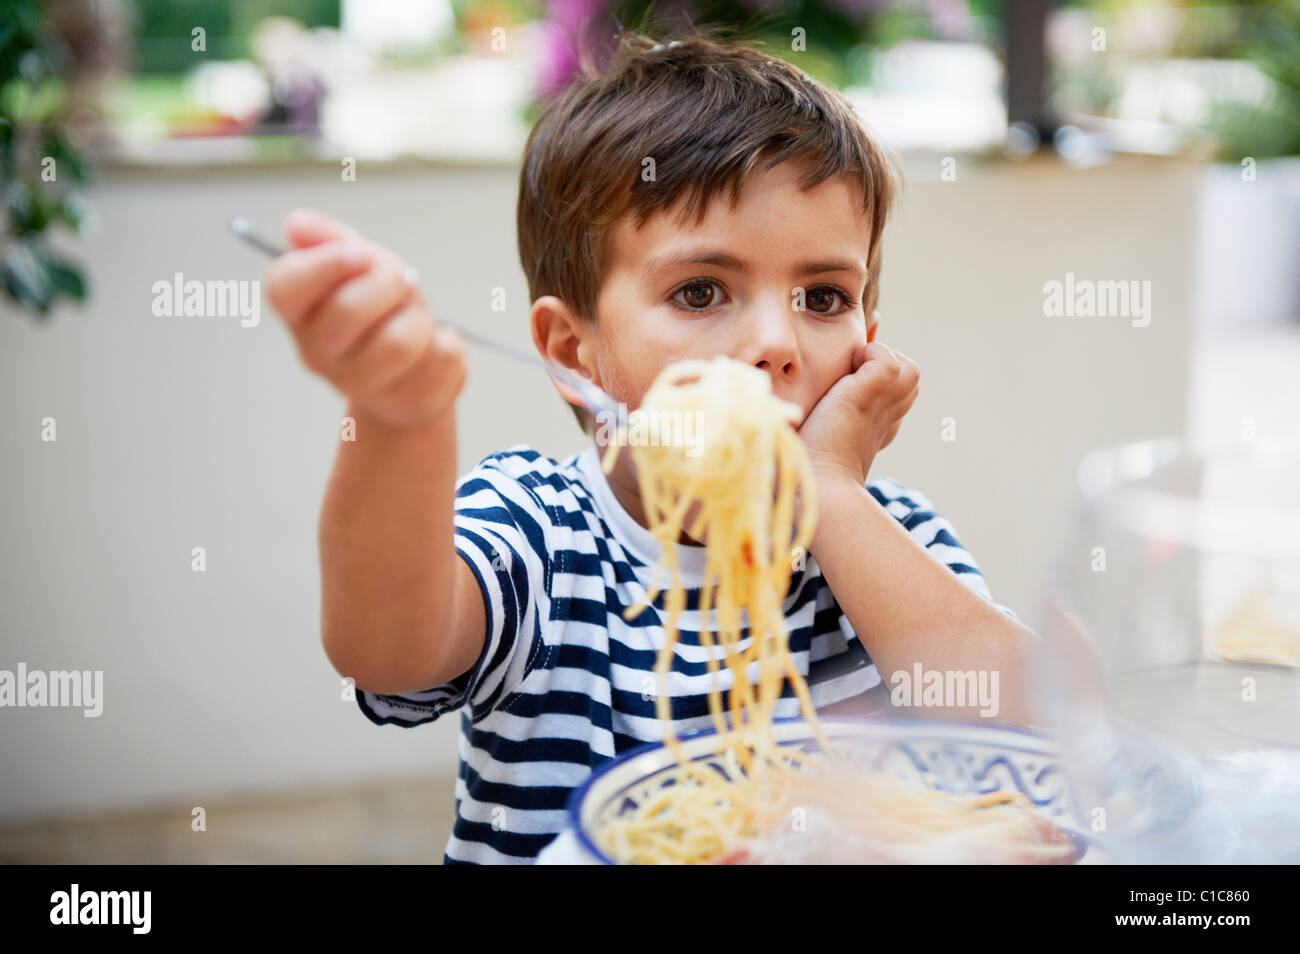 Young boy eating spaghetti Stock Photo